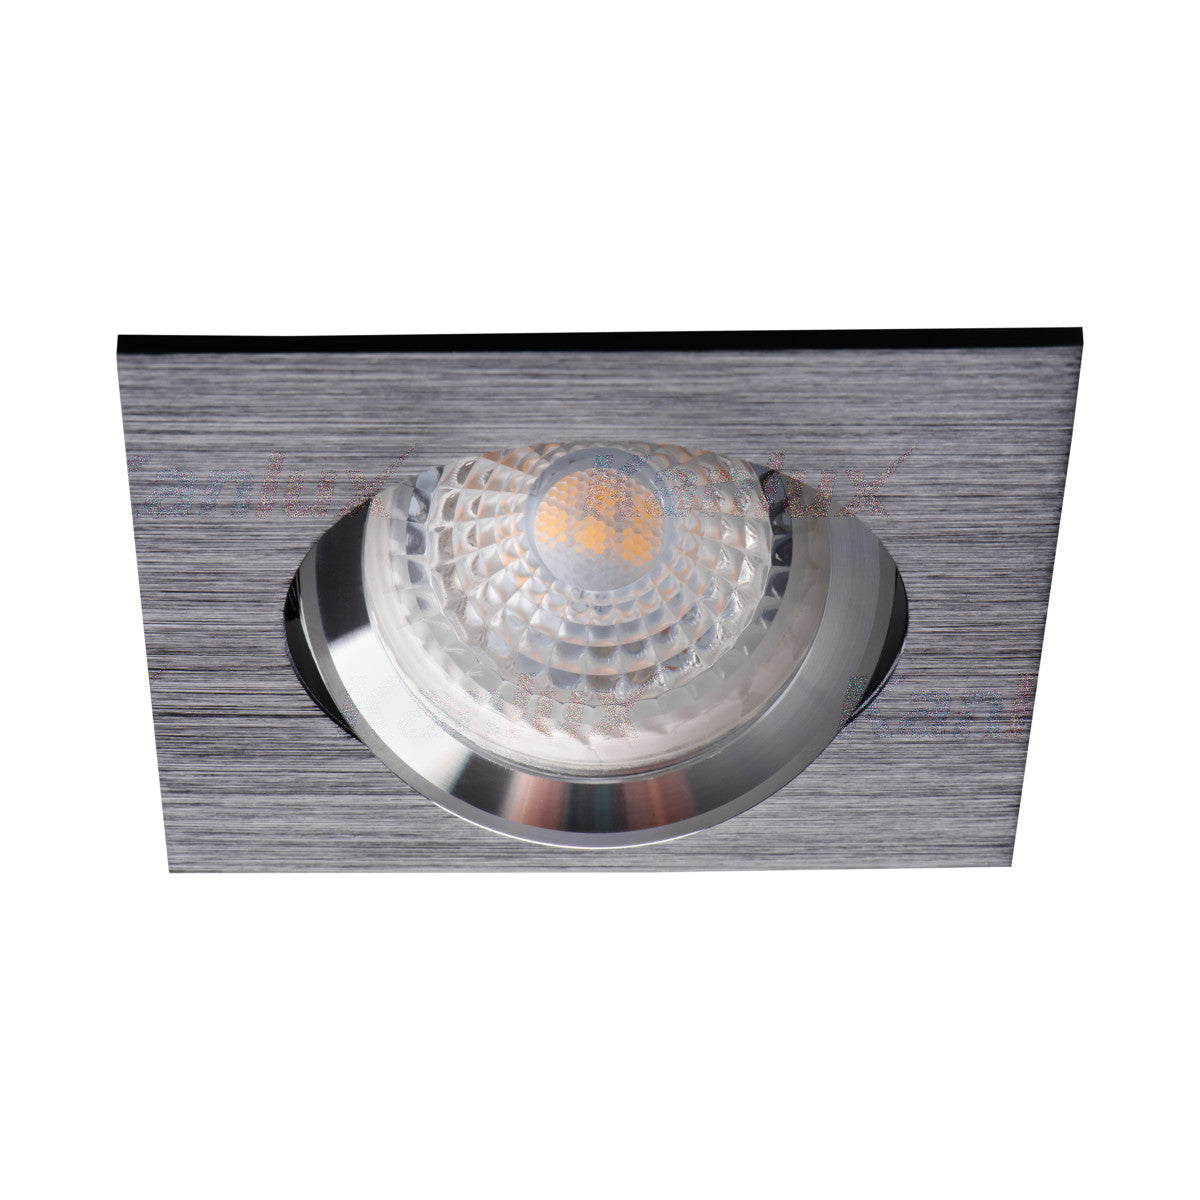 Kanlux GWEN Ceiling Recessed GU10 Tilt Adjustable Downlight Spot Light Fitting 240V